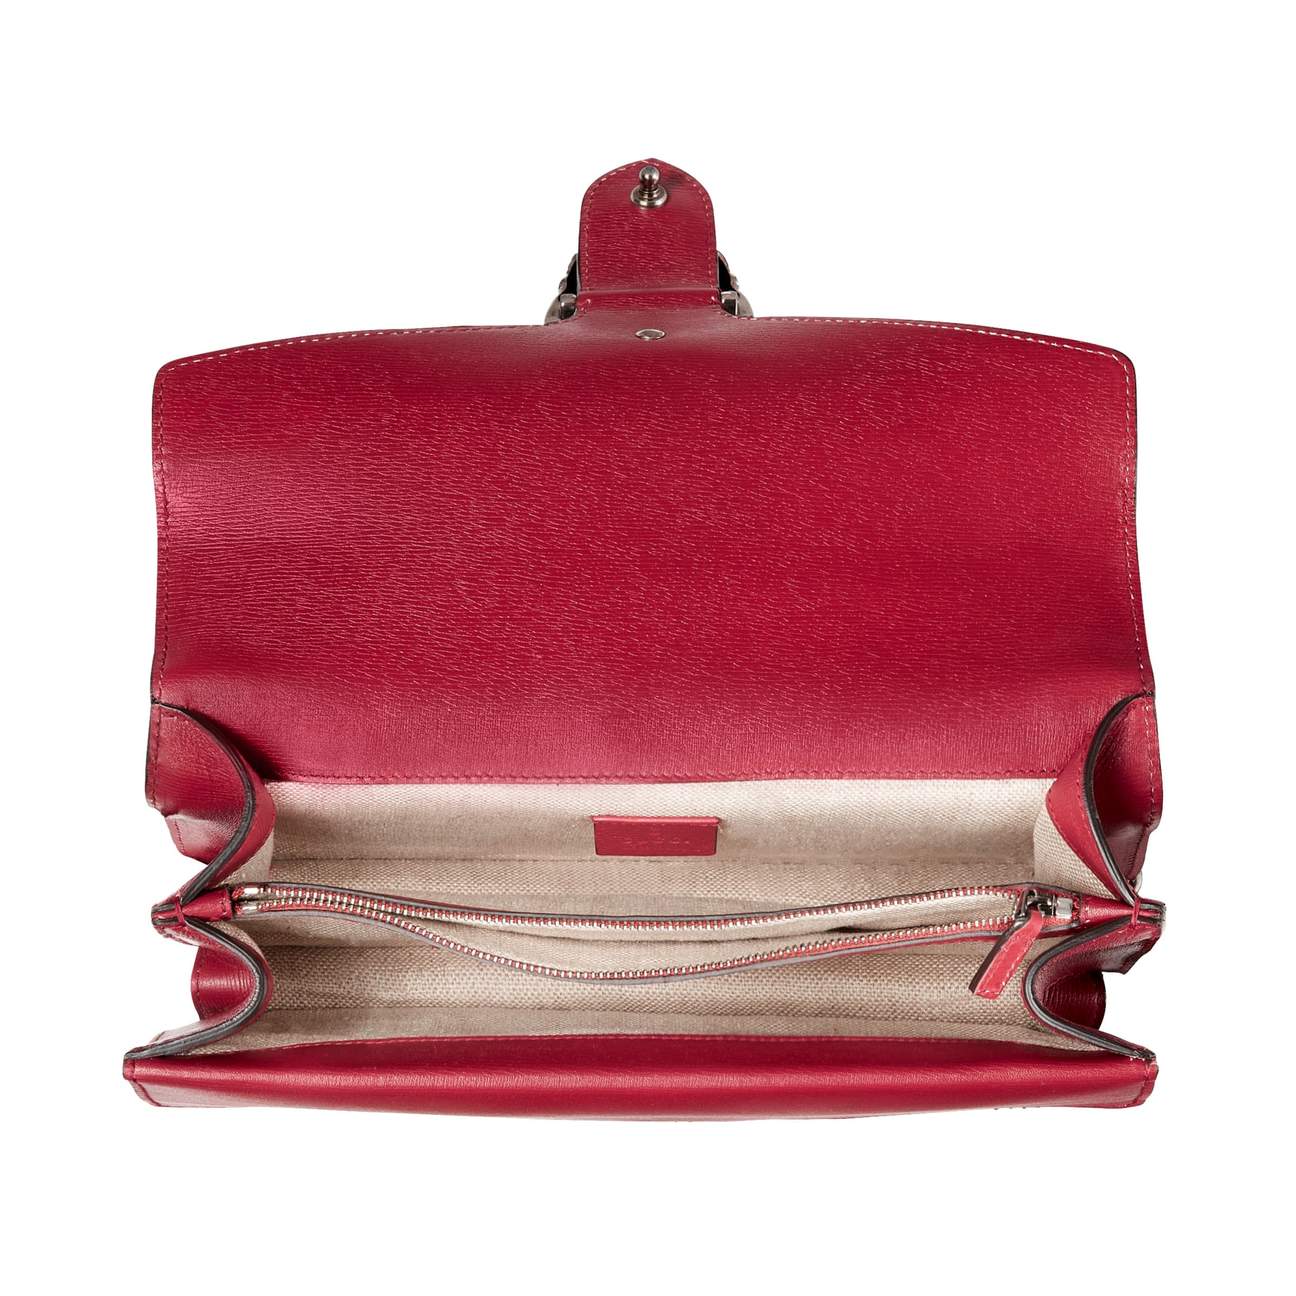 Gucci Reins Leather Hobo Shoulder Bag Red – Blooming Resale